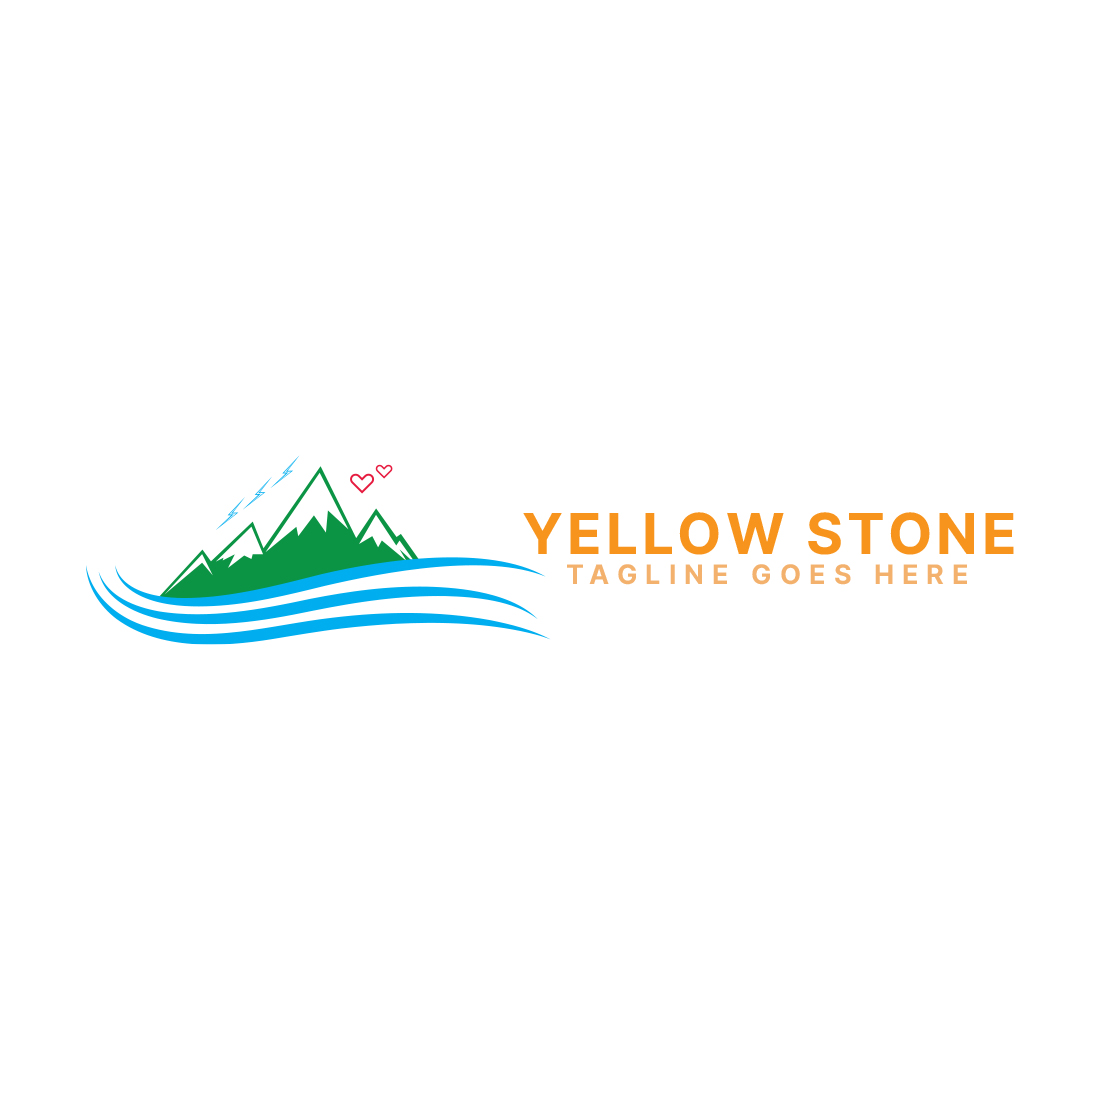 yellowstone Pictorial Logo temoplate.